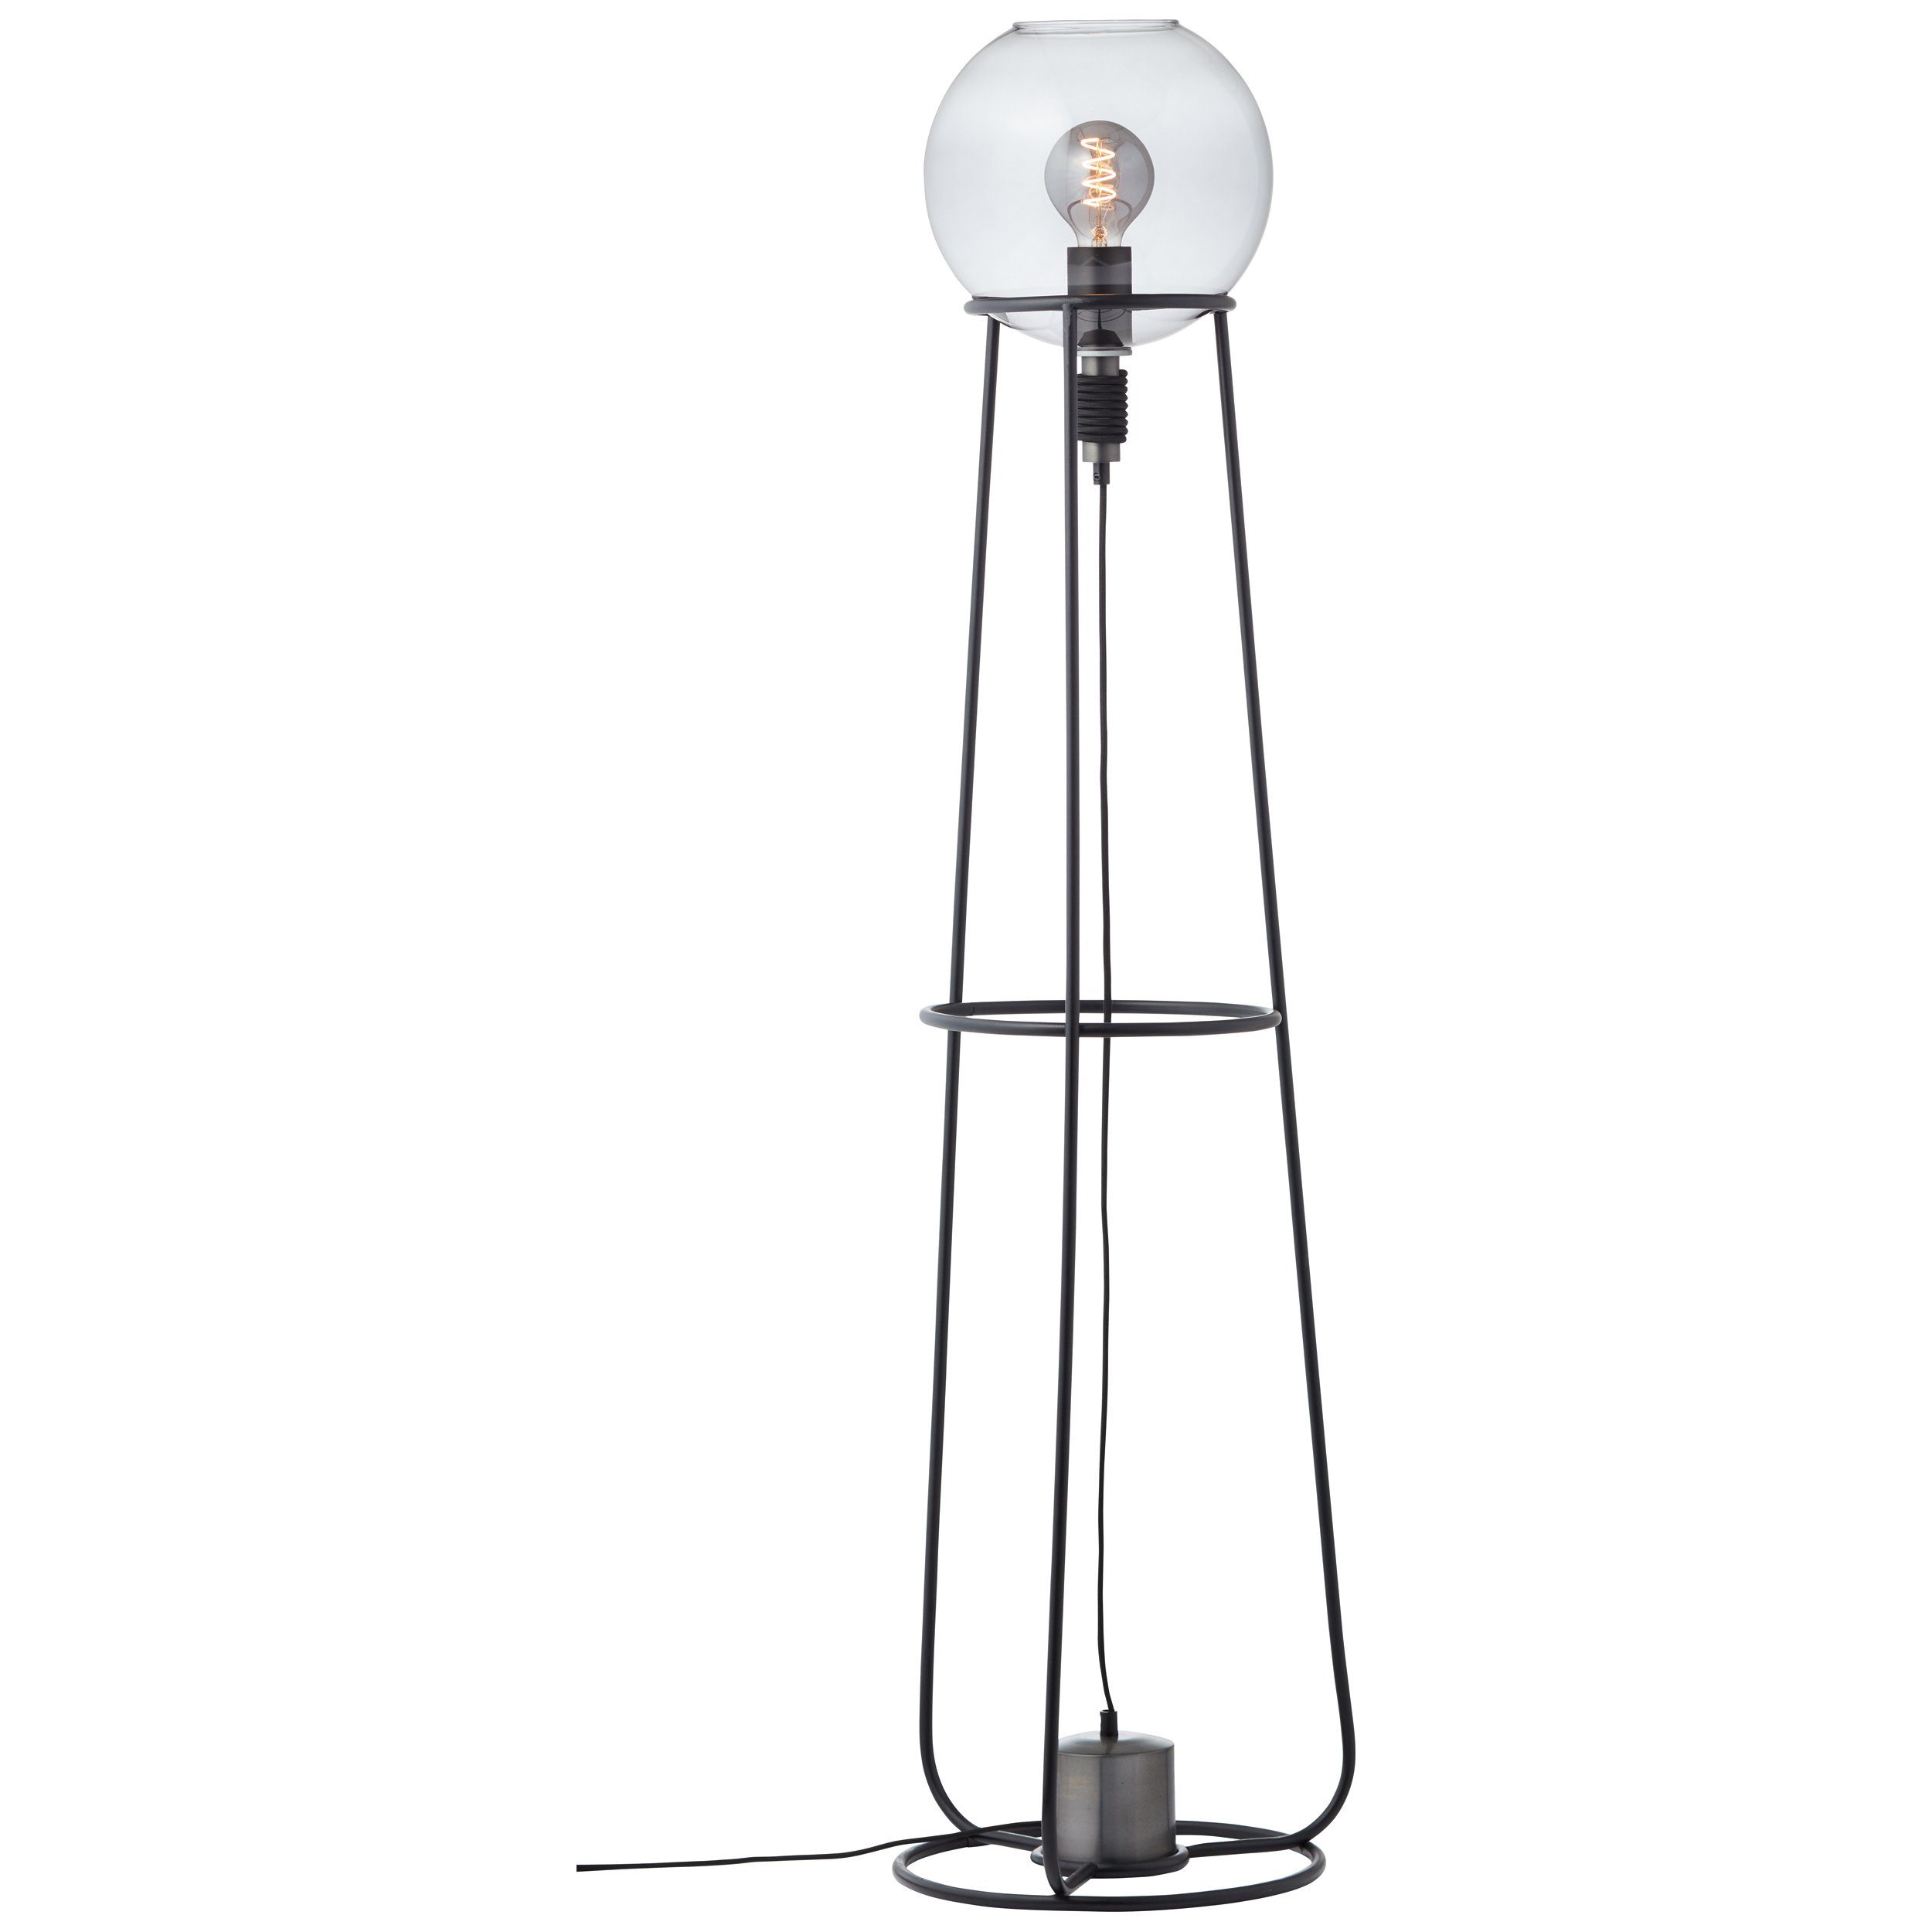 Brilliant Stehlampe Pheme, 1flg E27, schwarz/silber, 1x Pheme Standleuchte 52 W Metall/Glas, A60